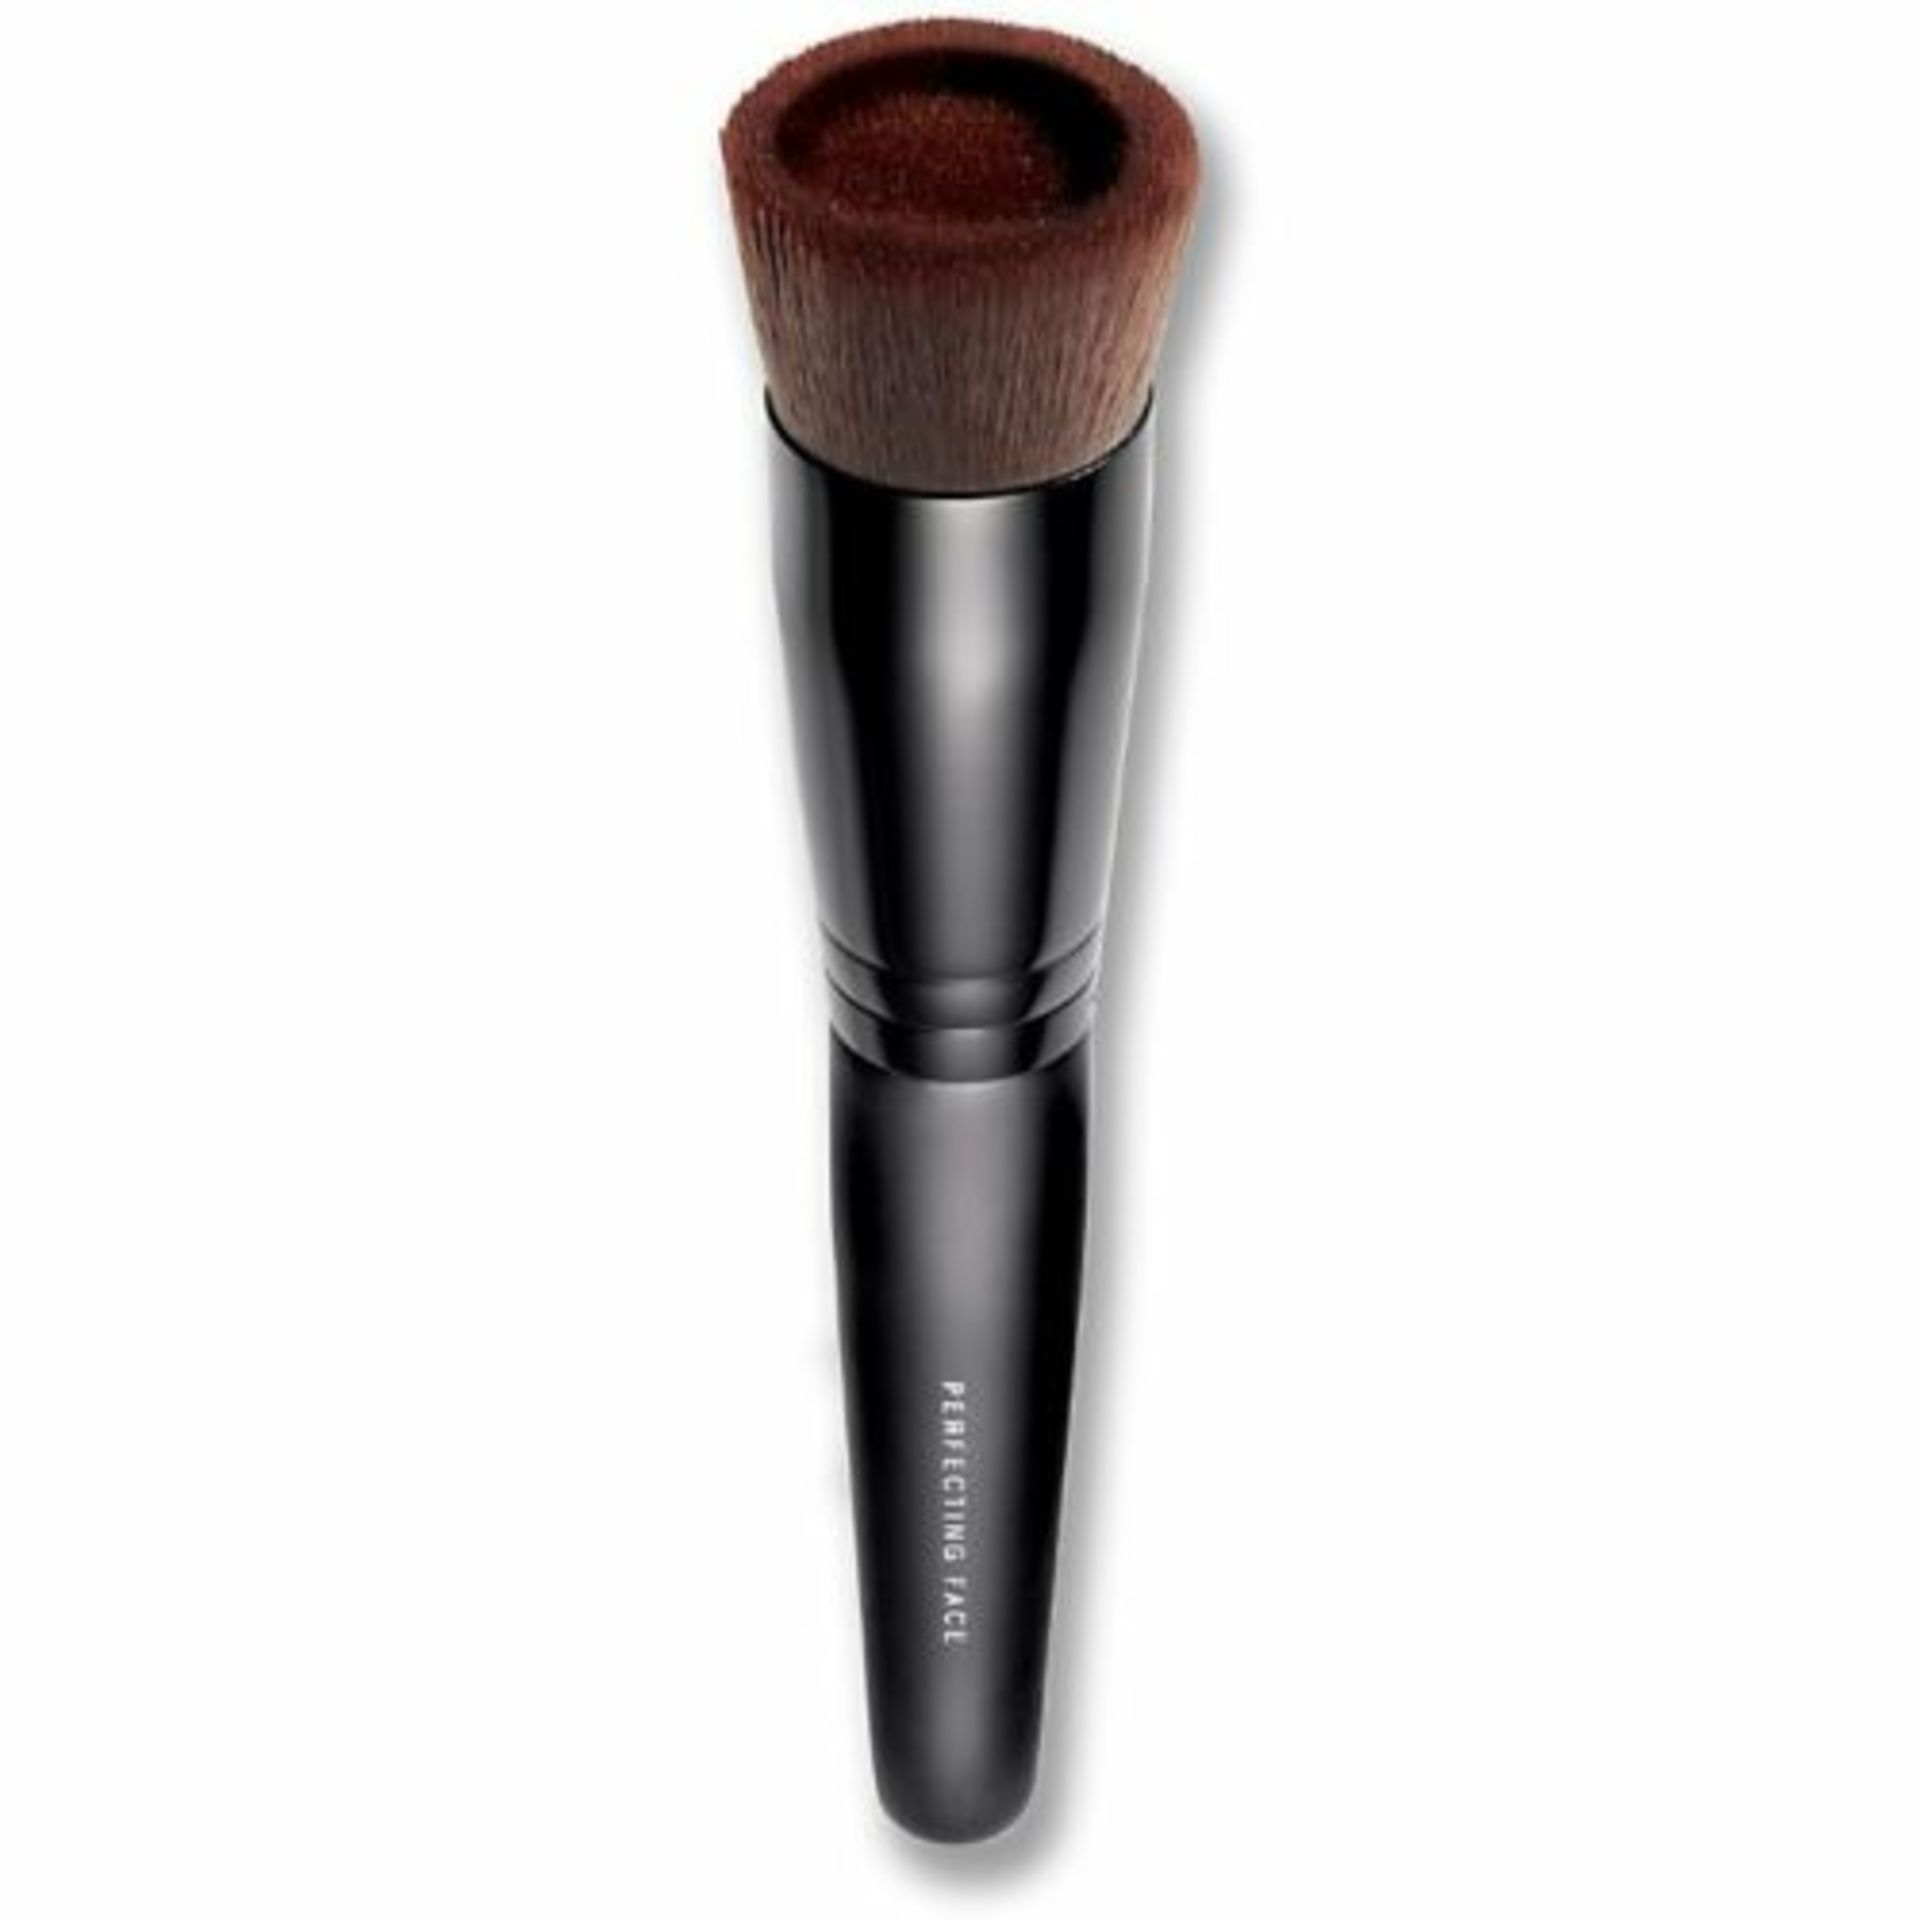 1 x Bare Escentuals bareMinerals “BARESKIN” Perfecting Face Brush - Genuine Product - Brand New